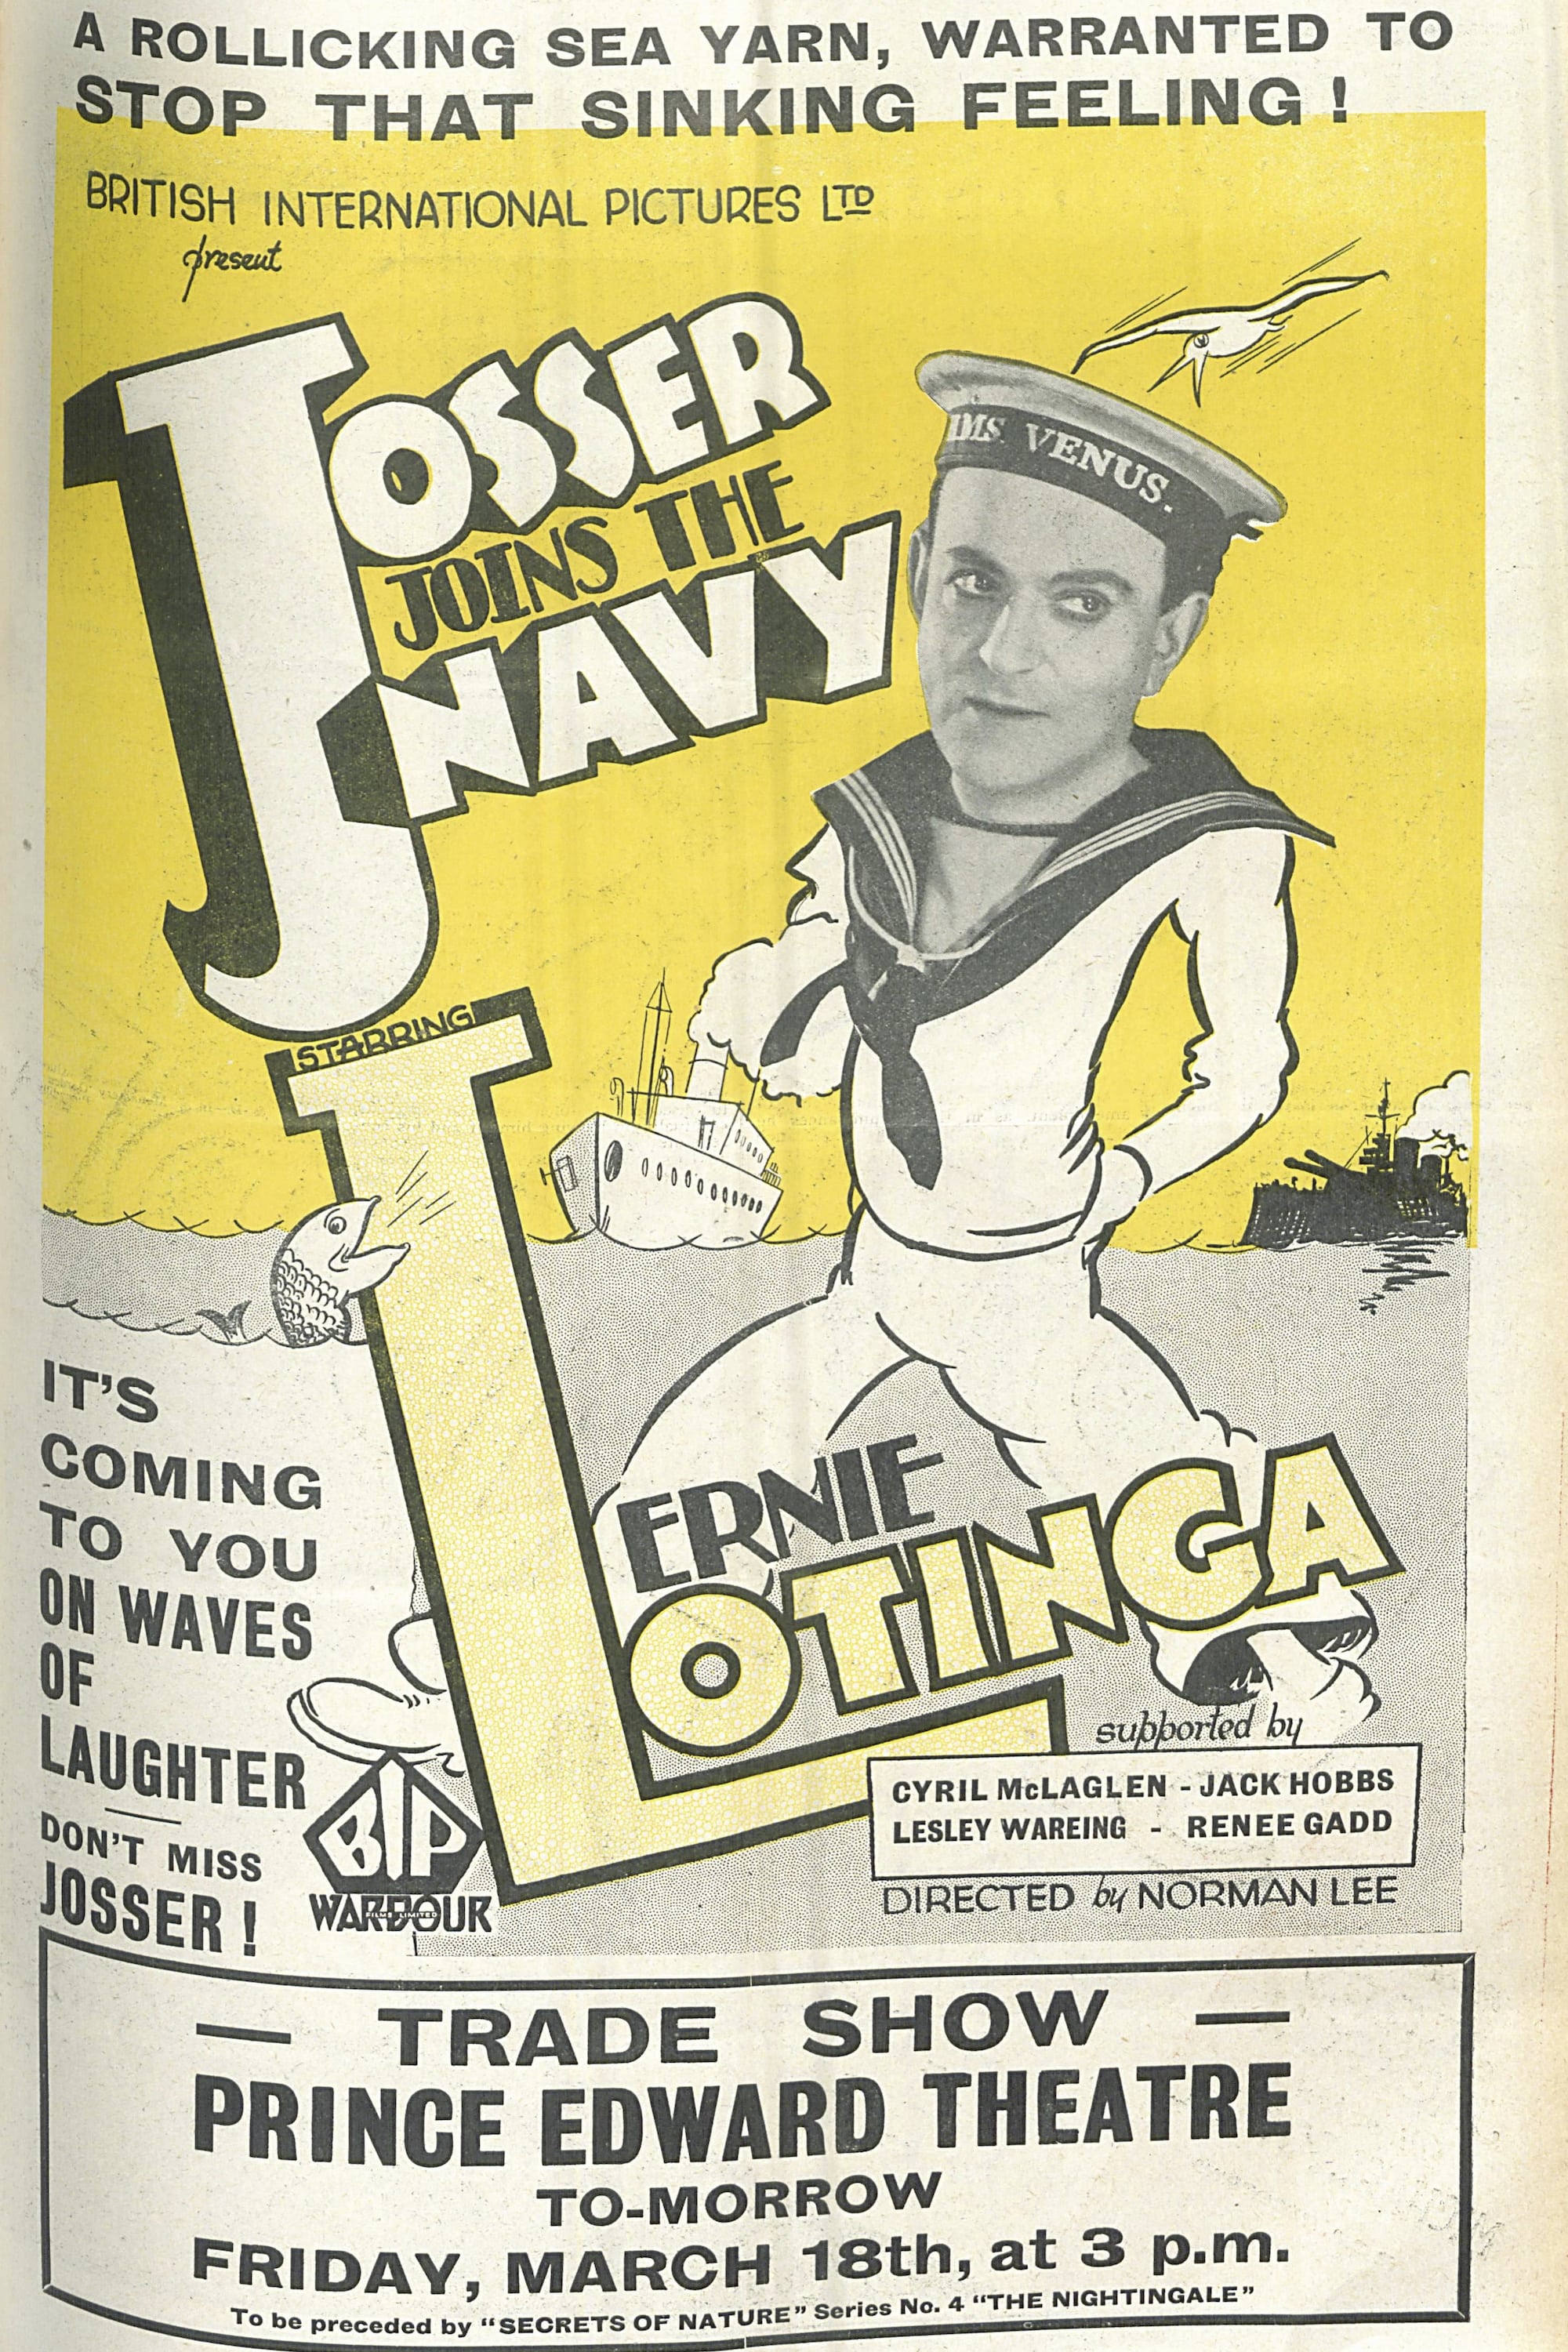 Josser Joins the Navy